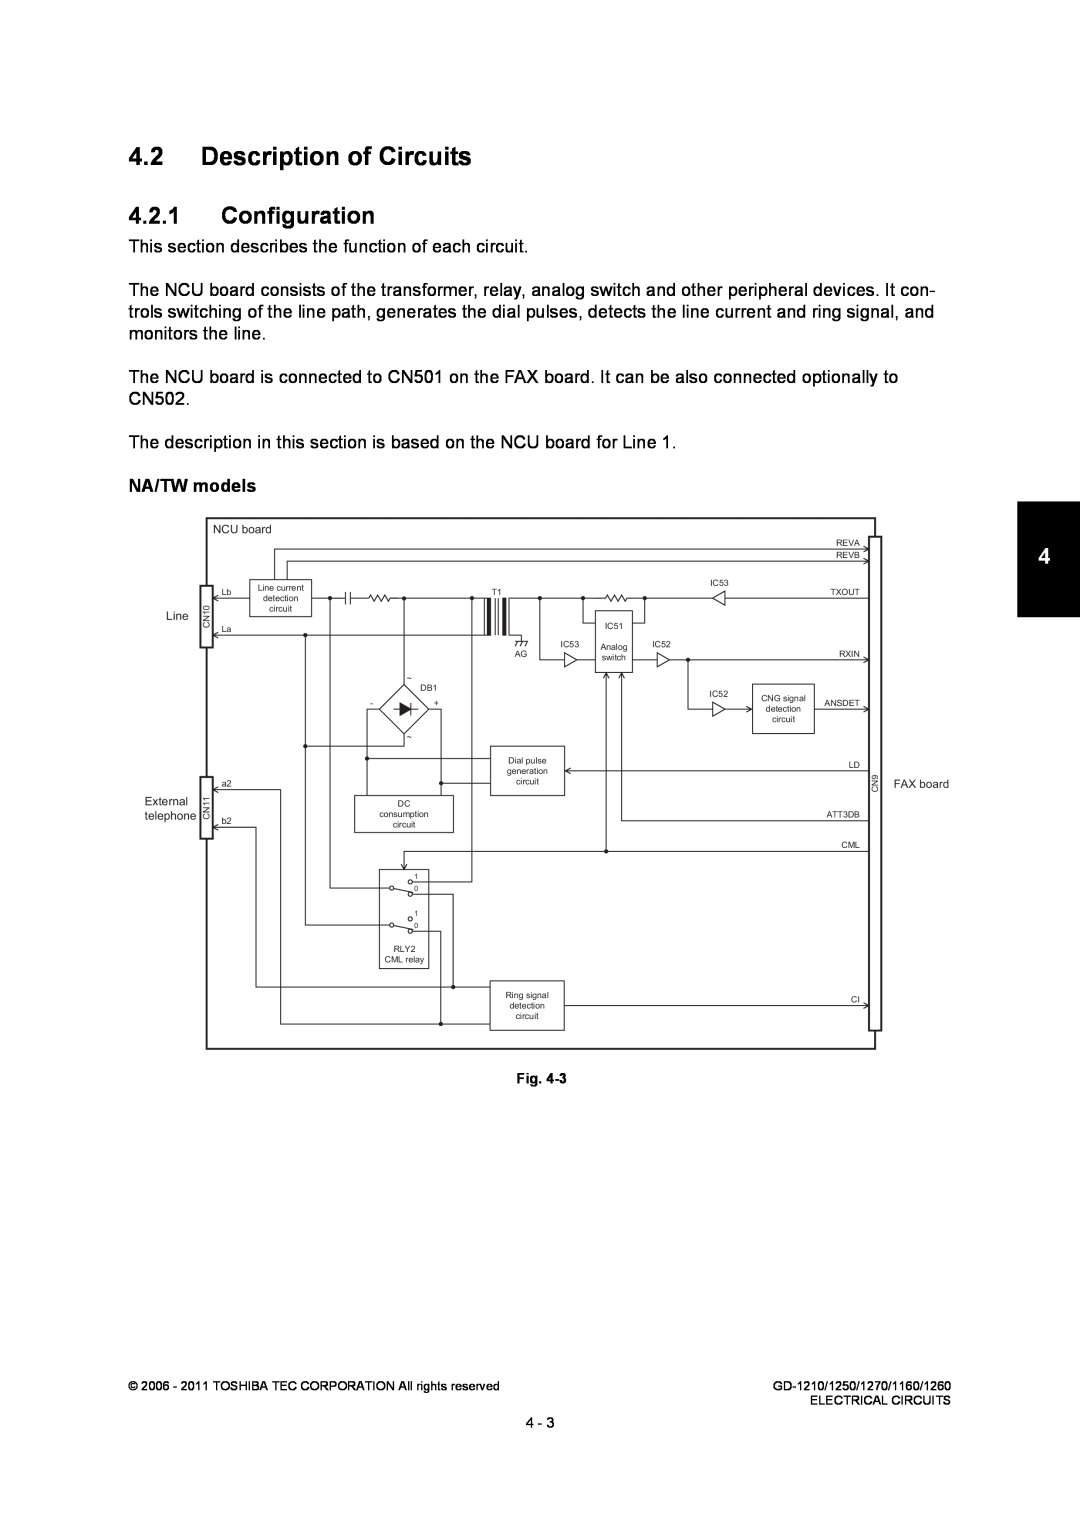 Toshiba GD-1250, GD-1260, GD-1270, GD-1160, GD-1210 service manual Description of Circuits, Configuration, NA/TW models 